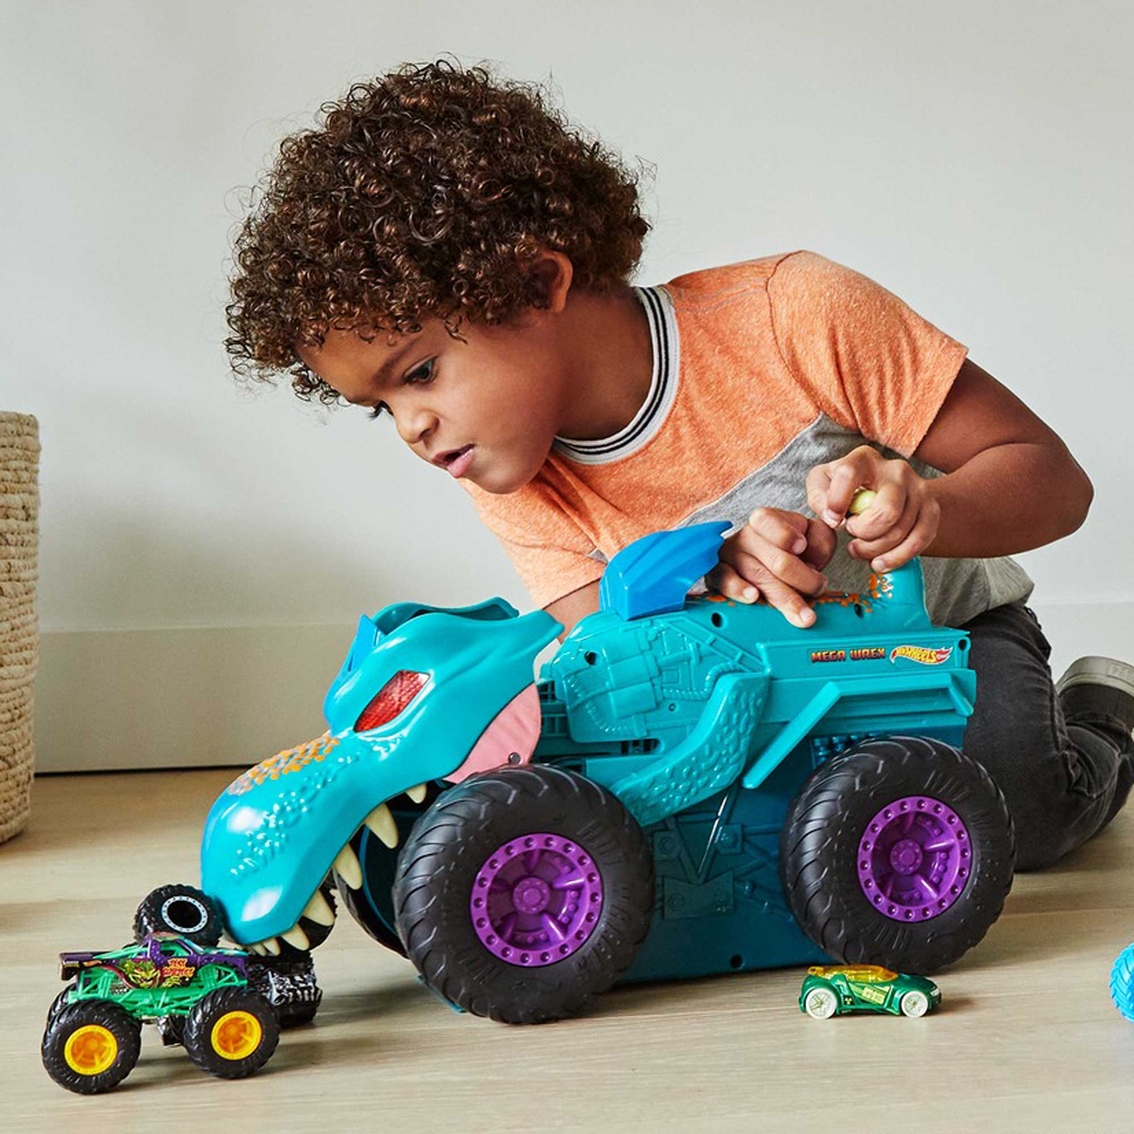 Hot Wheels Monster Trucks toy vehicle - Imagine That Toys